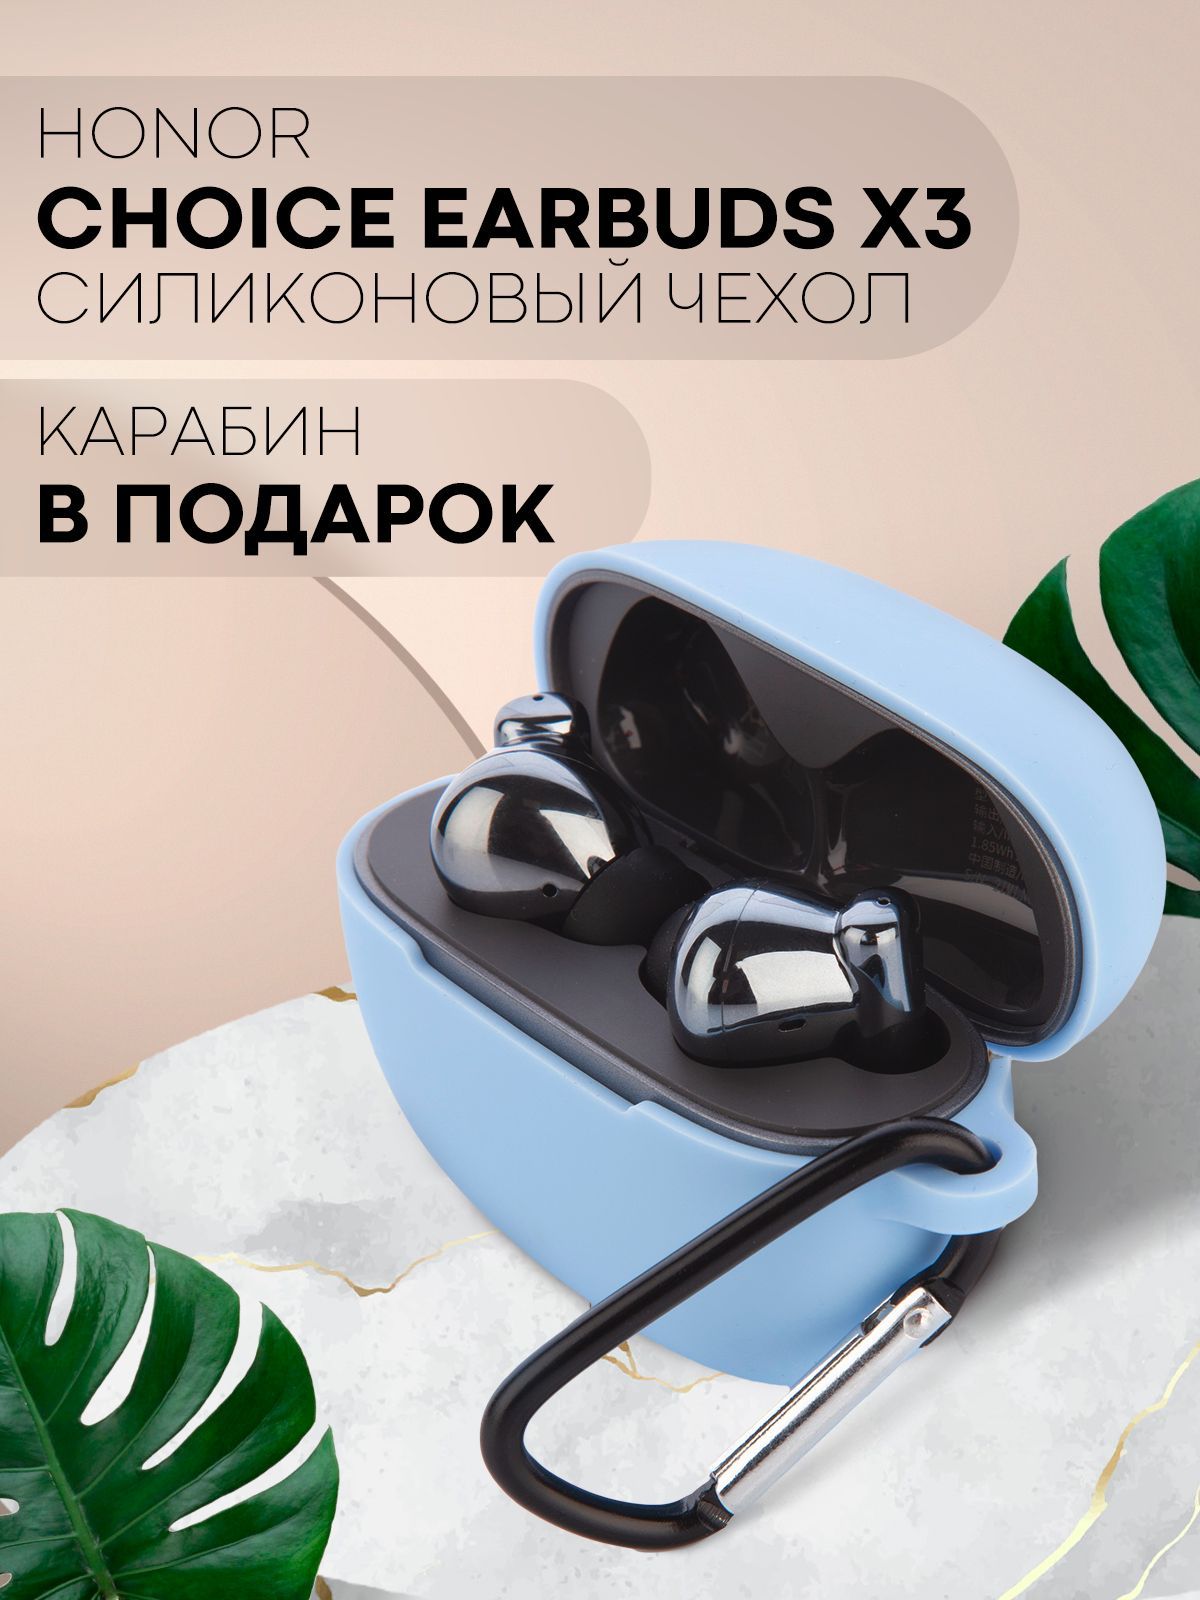 Honor choice earbuds x3 купить. Чехол на наушники Earbuds x3. Honor choise Earbuds x5e шильдик. Honor choice Earbuds x5 инструкция как подключить.